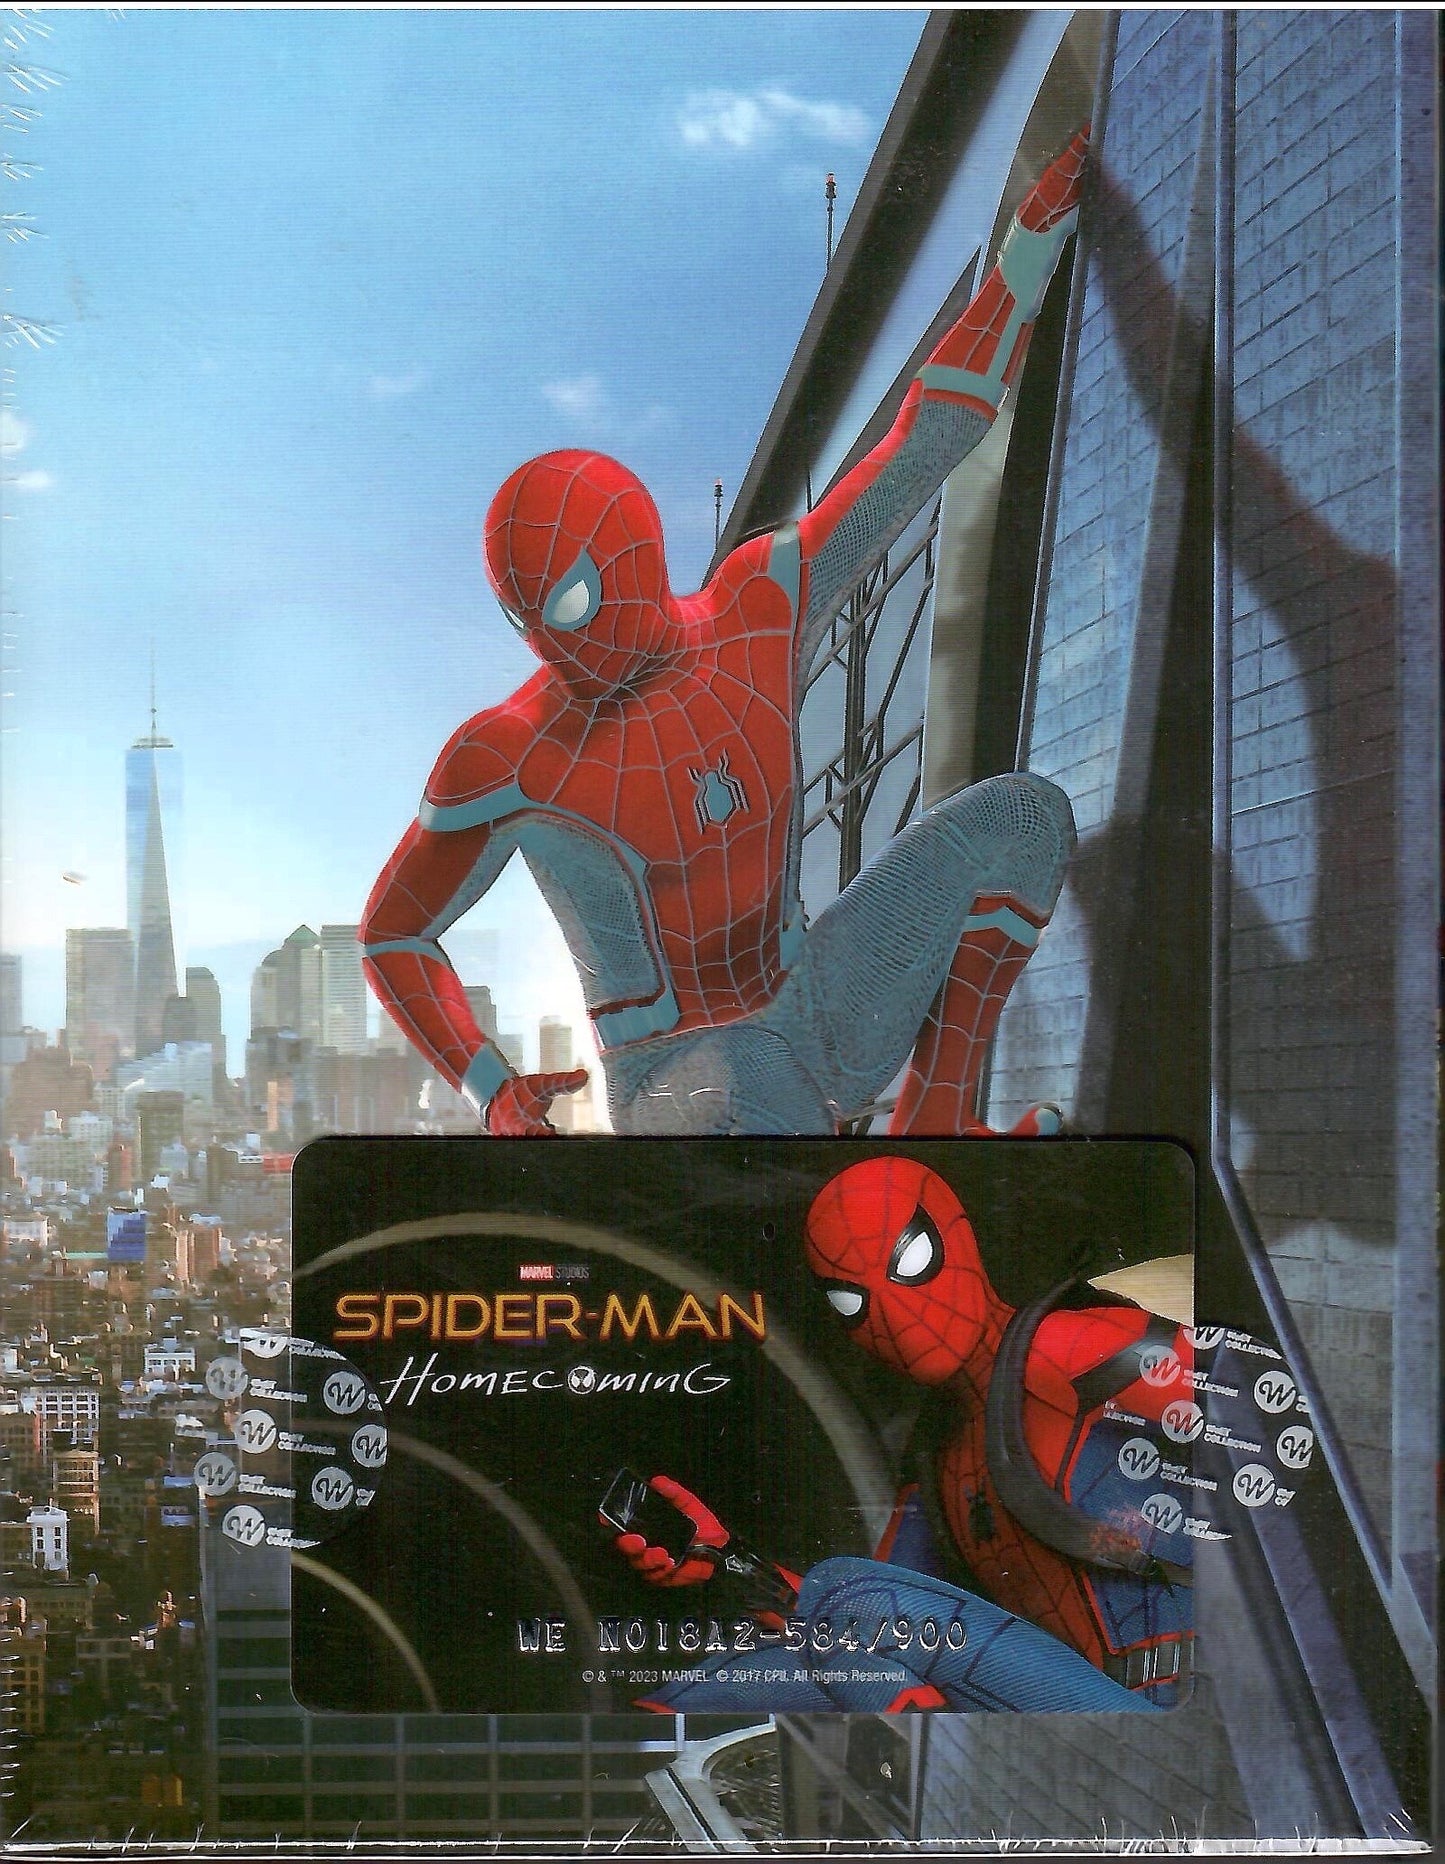 Spider-Man: Homecoming 3D + 4K Full Slip A2 SteelBook (WCE#018)(Korea)